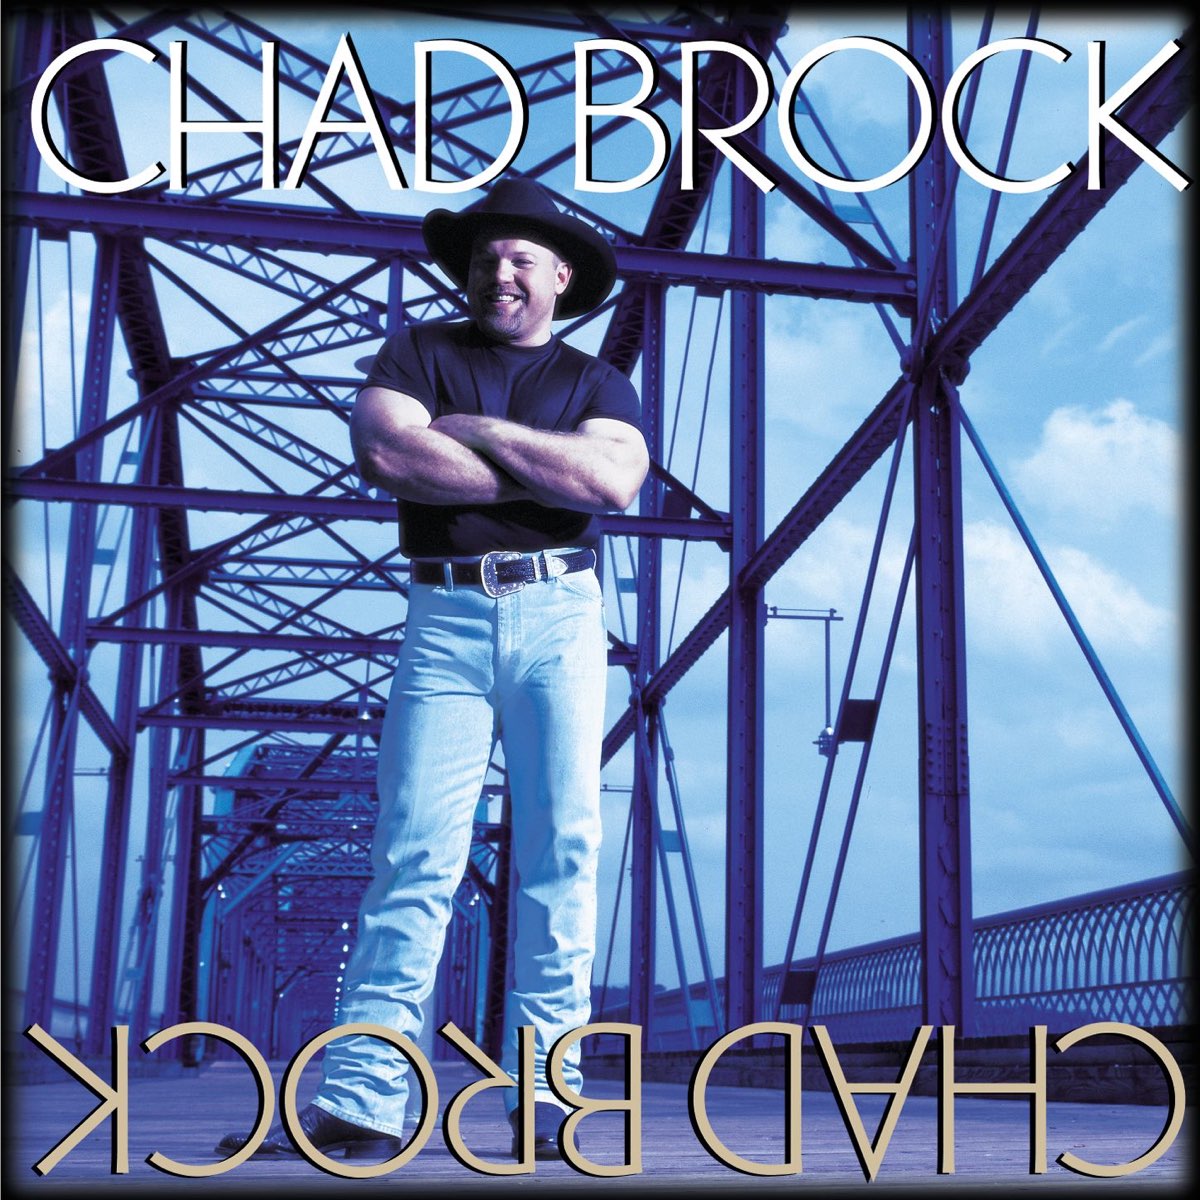 ‎chad Brock Album By Chad Brock Apple Music